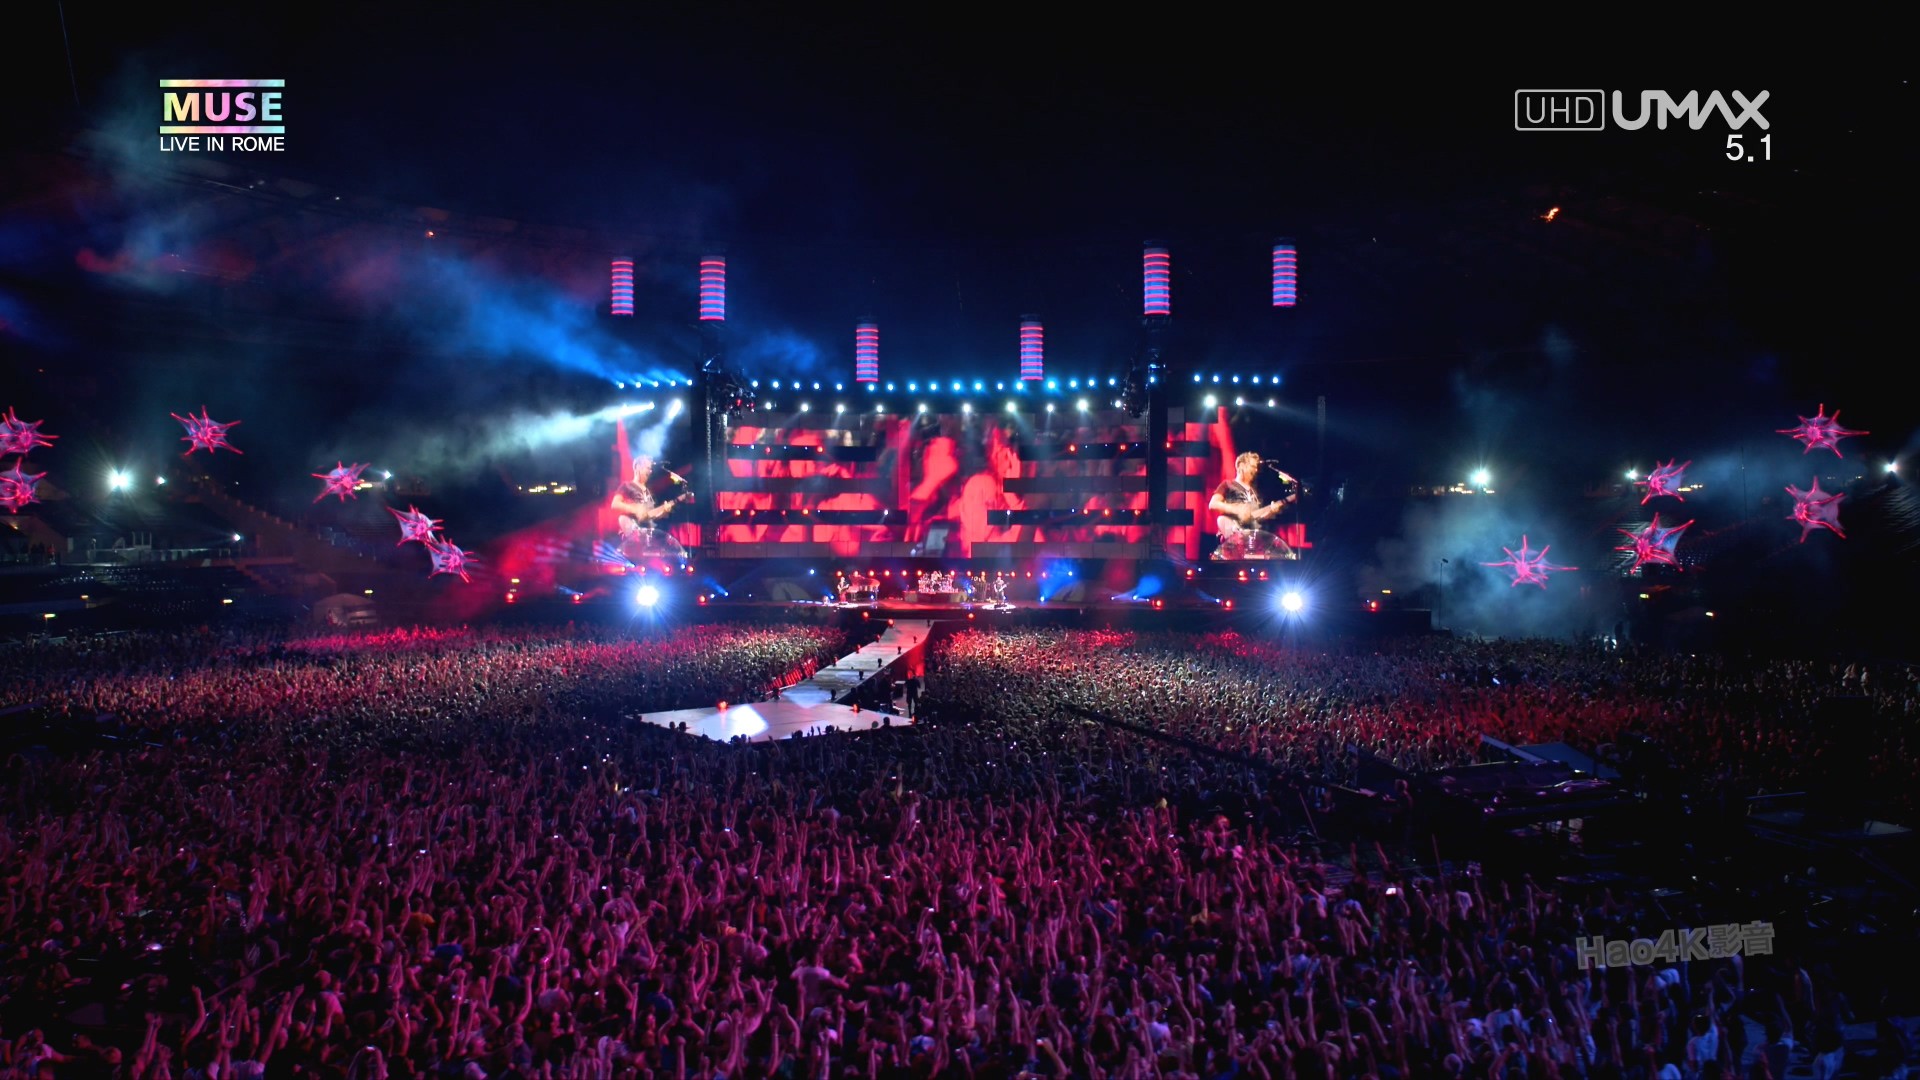 Muse.Live.At.Rome.Olympic.Stadium.2013.2160p.UHDTV.HEVC.mkv_20210222_111150.107.jpg